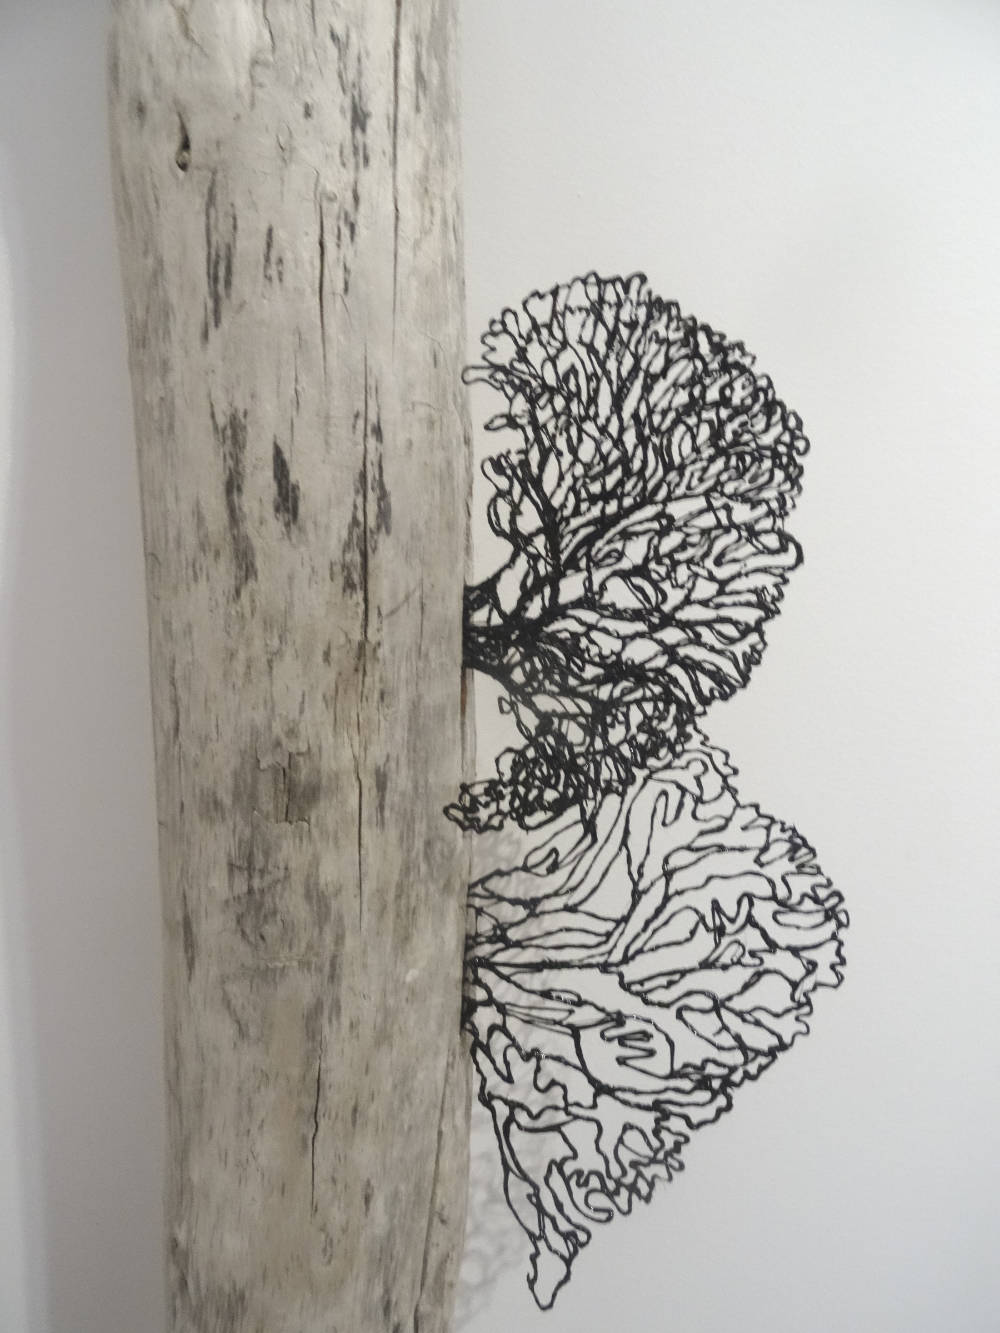 Anitta Toivio - SYMBIOSIS detail - 3D pen sculpture on found driftwood - irregular about 48in high